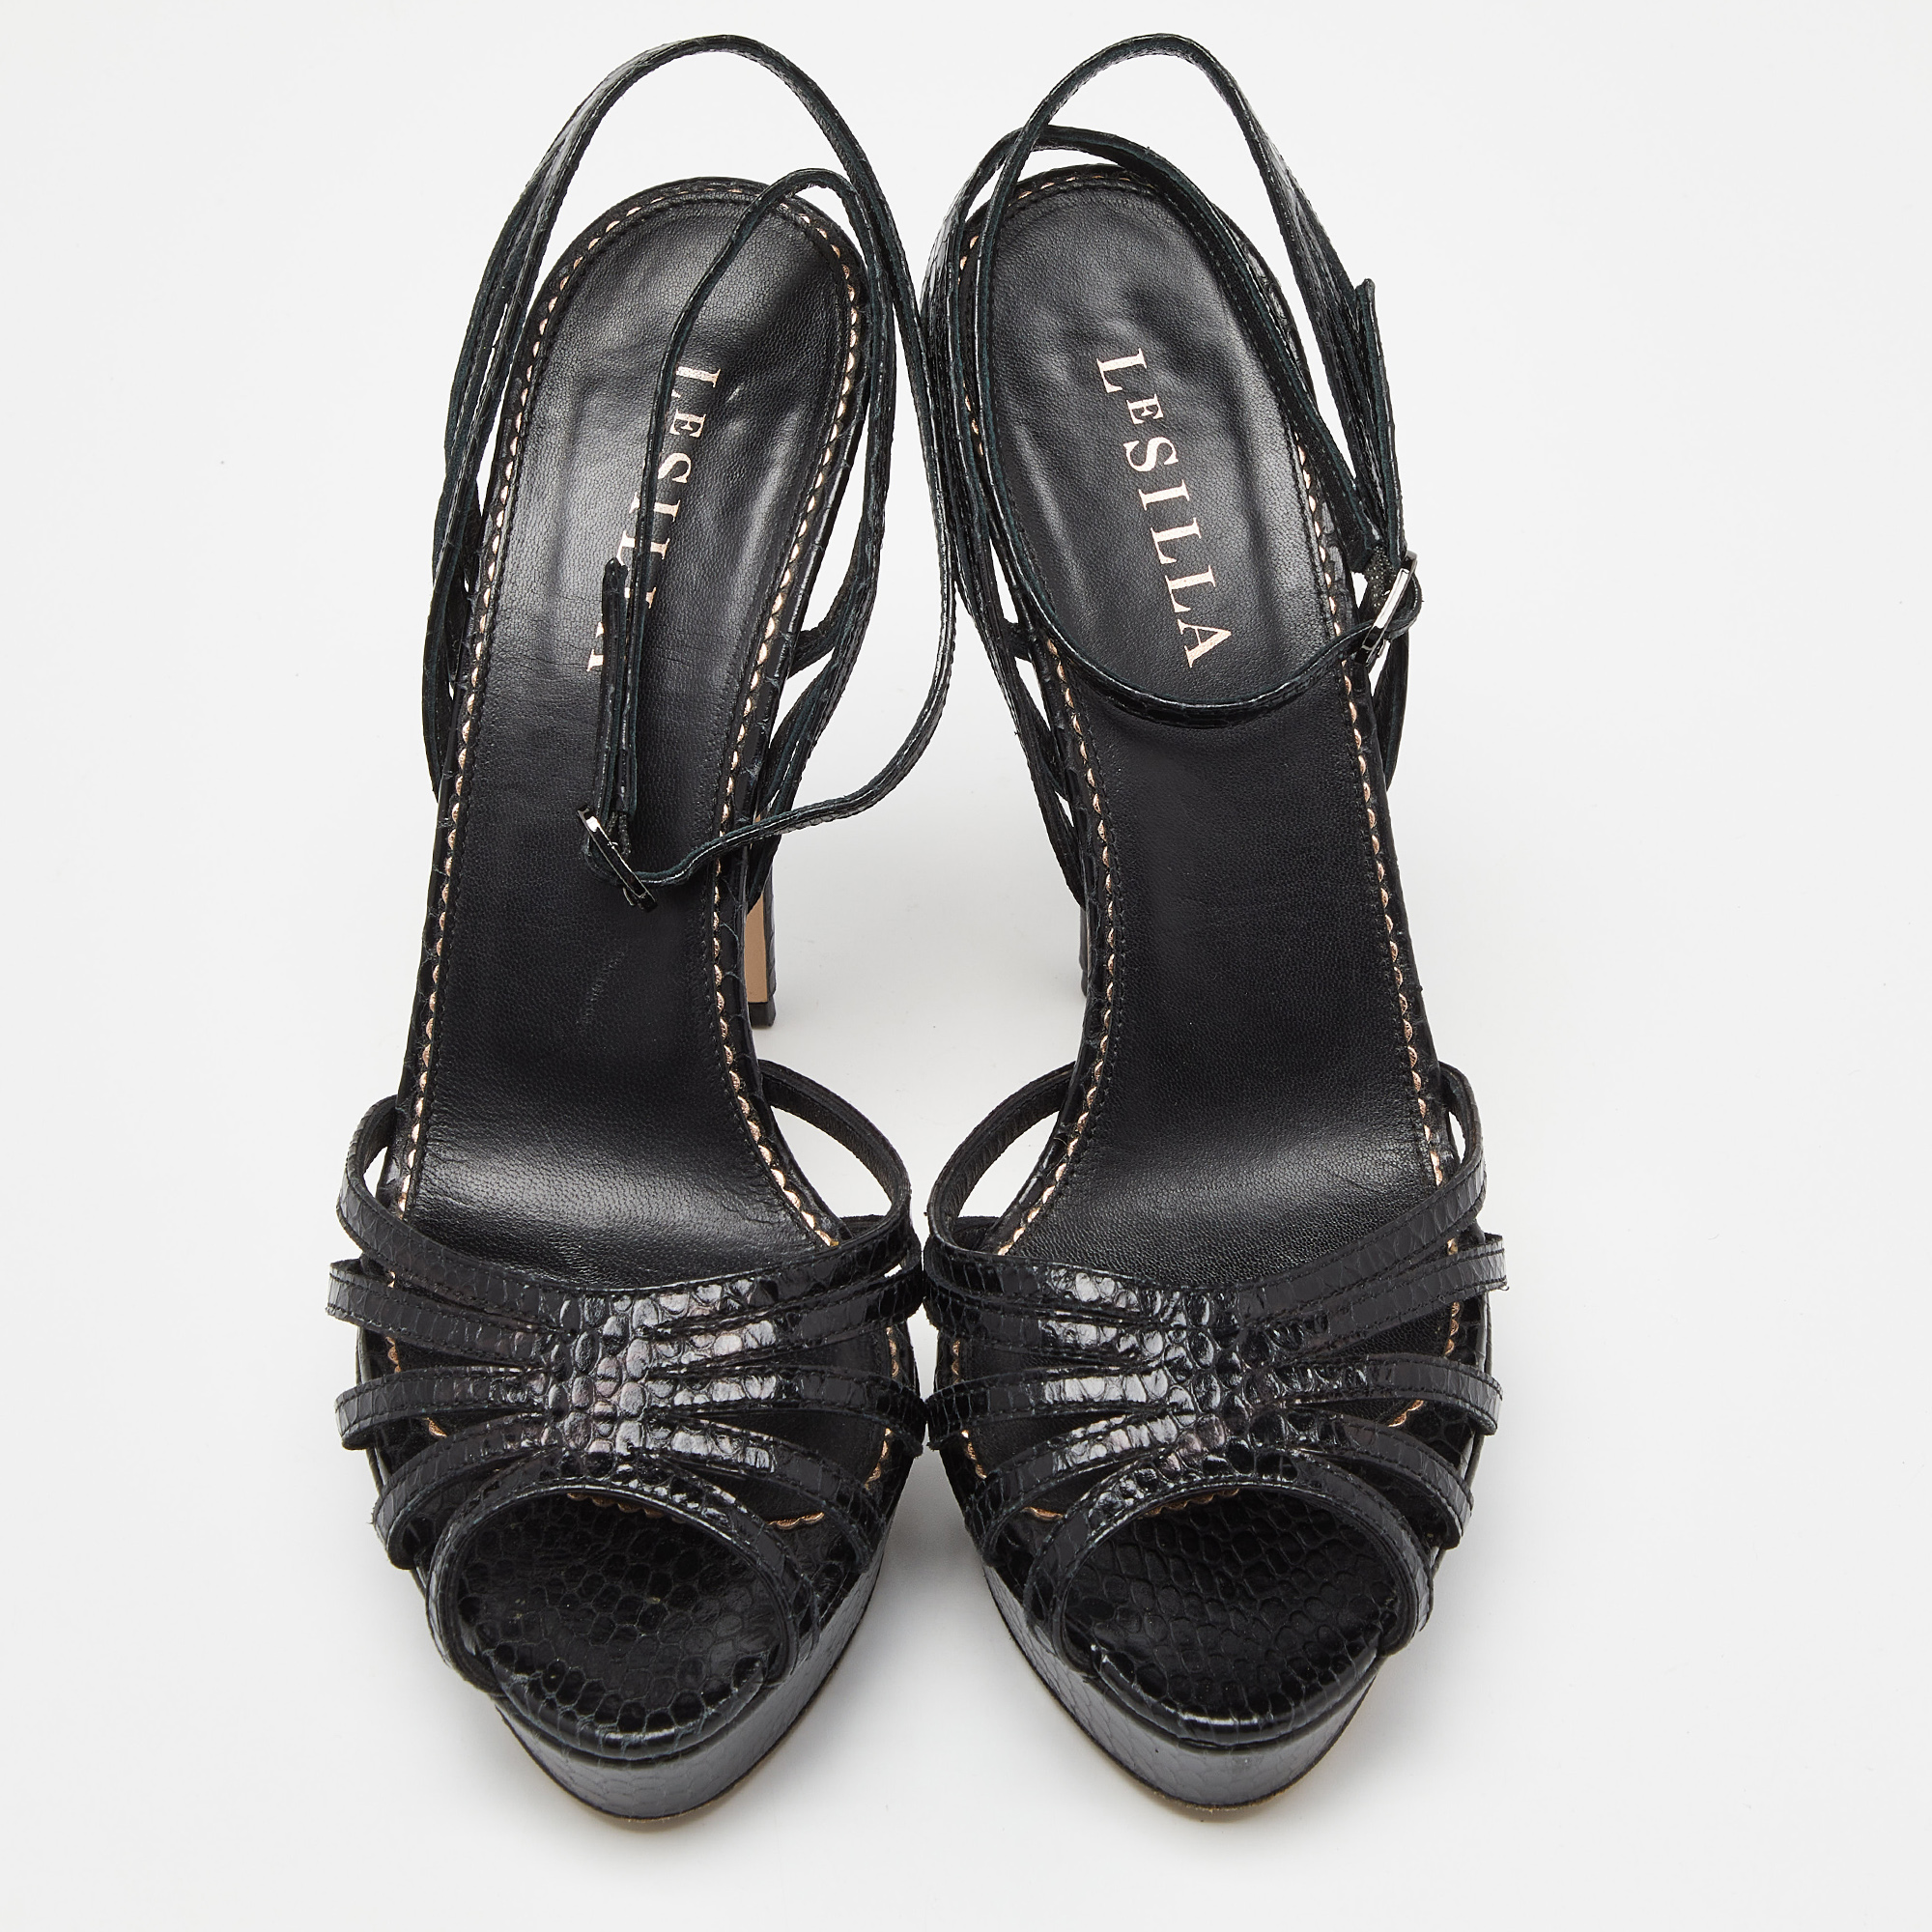 Le Silla Black Python Embossed Leather Ankle Strap Platform Sandals Size 40